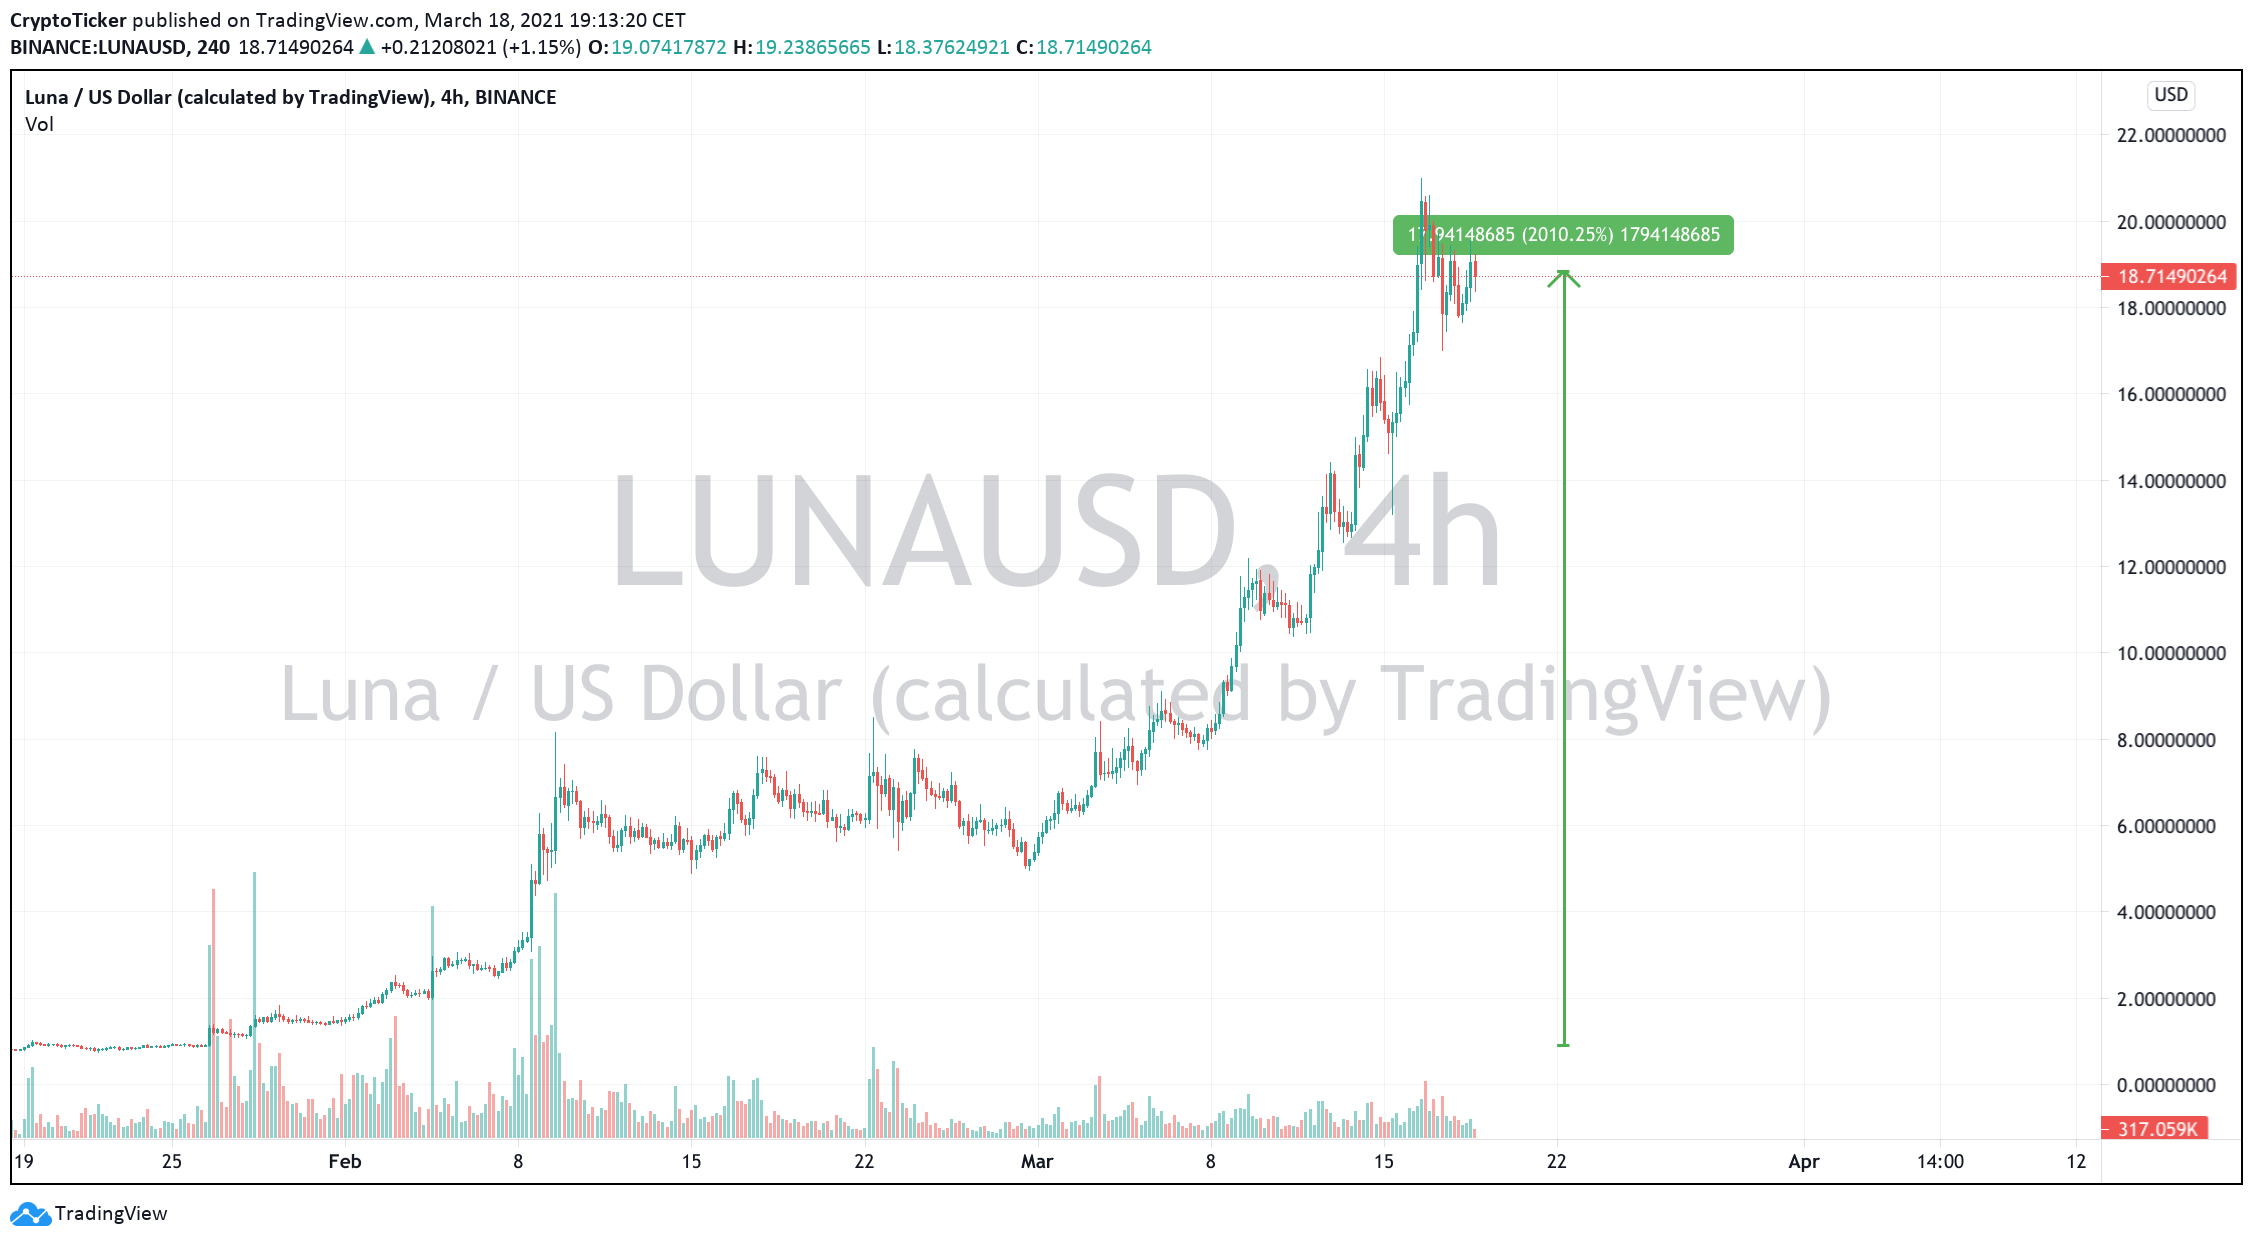 LUNA/USD 4-hour chart showing LUNA token exploding 2,000%